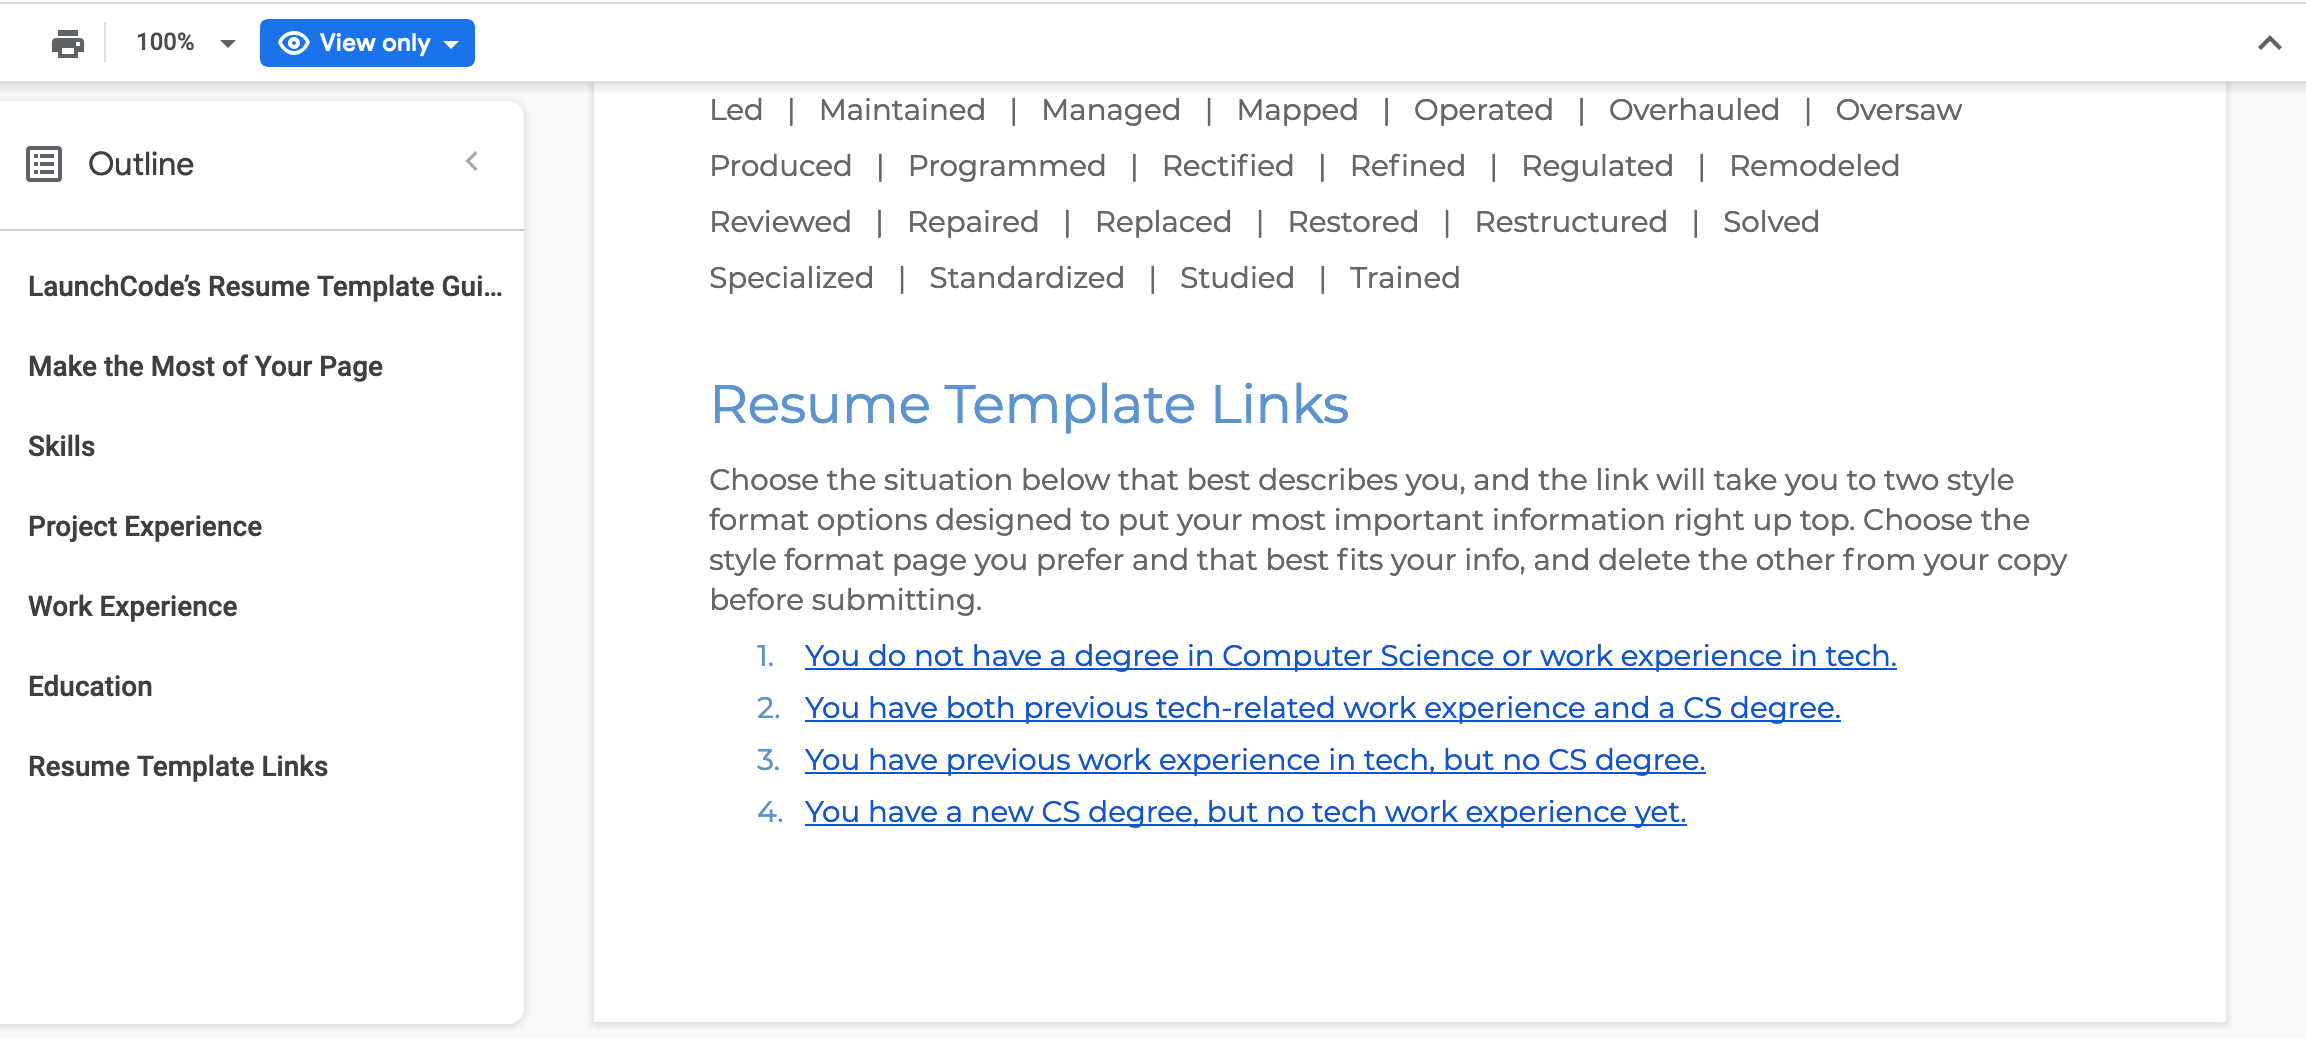 Resume Template Links